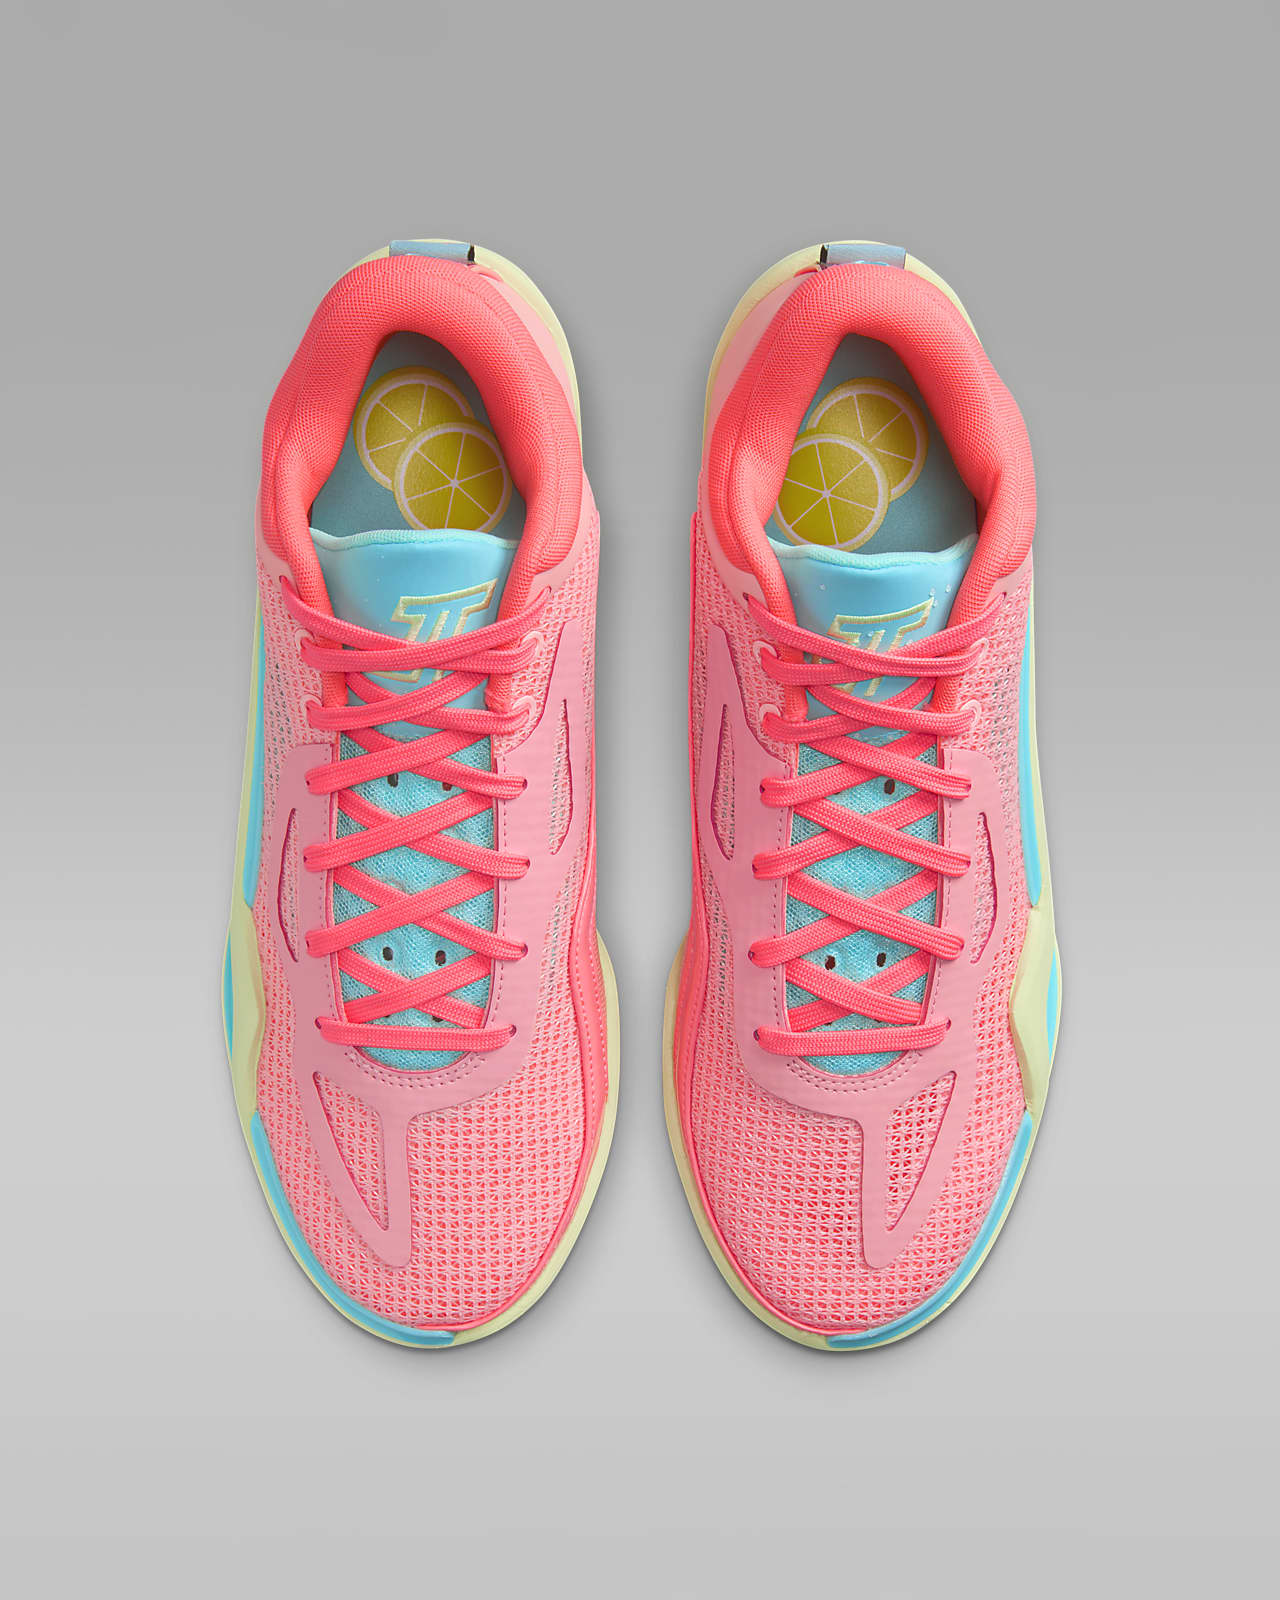 Tatum 1 'Pink Lemonade' PF Men's Basketball Shoes